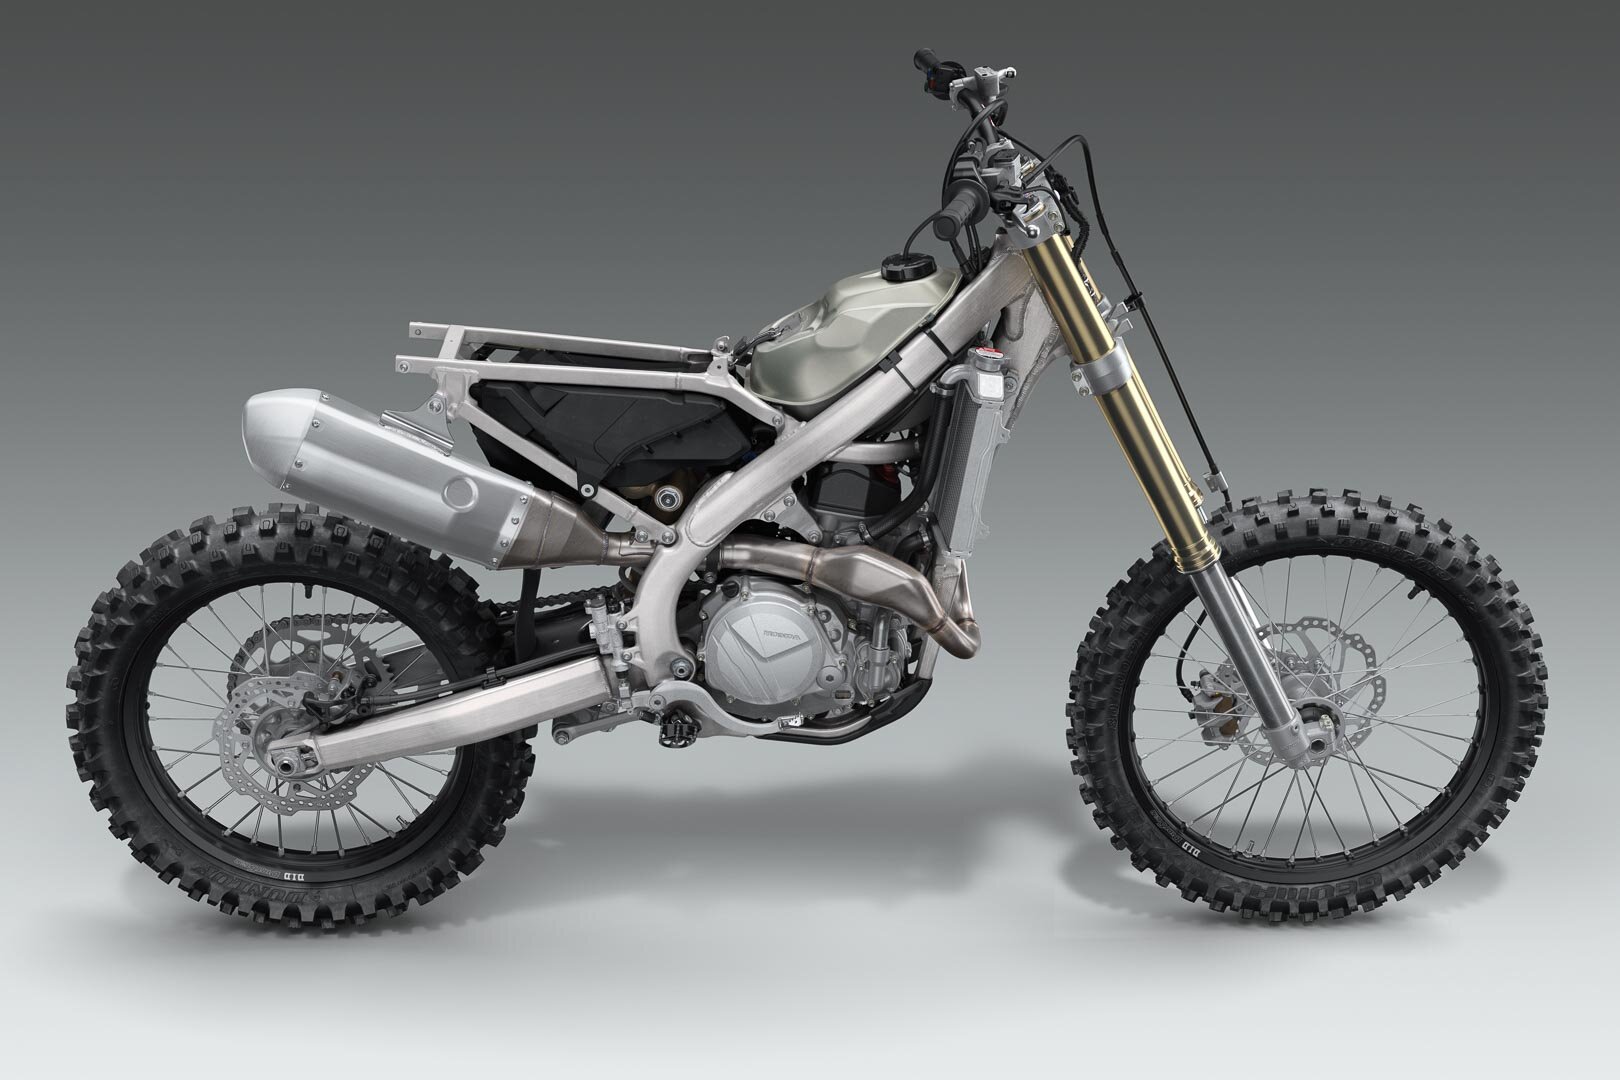 2021-Honda-CRF450R-First-Look-motocross-supercross-motorcycle-13.jpg